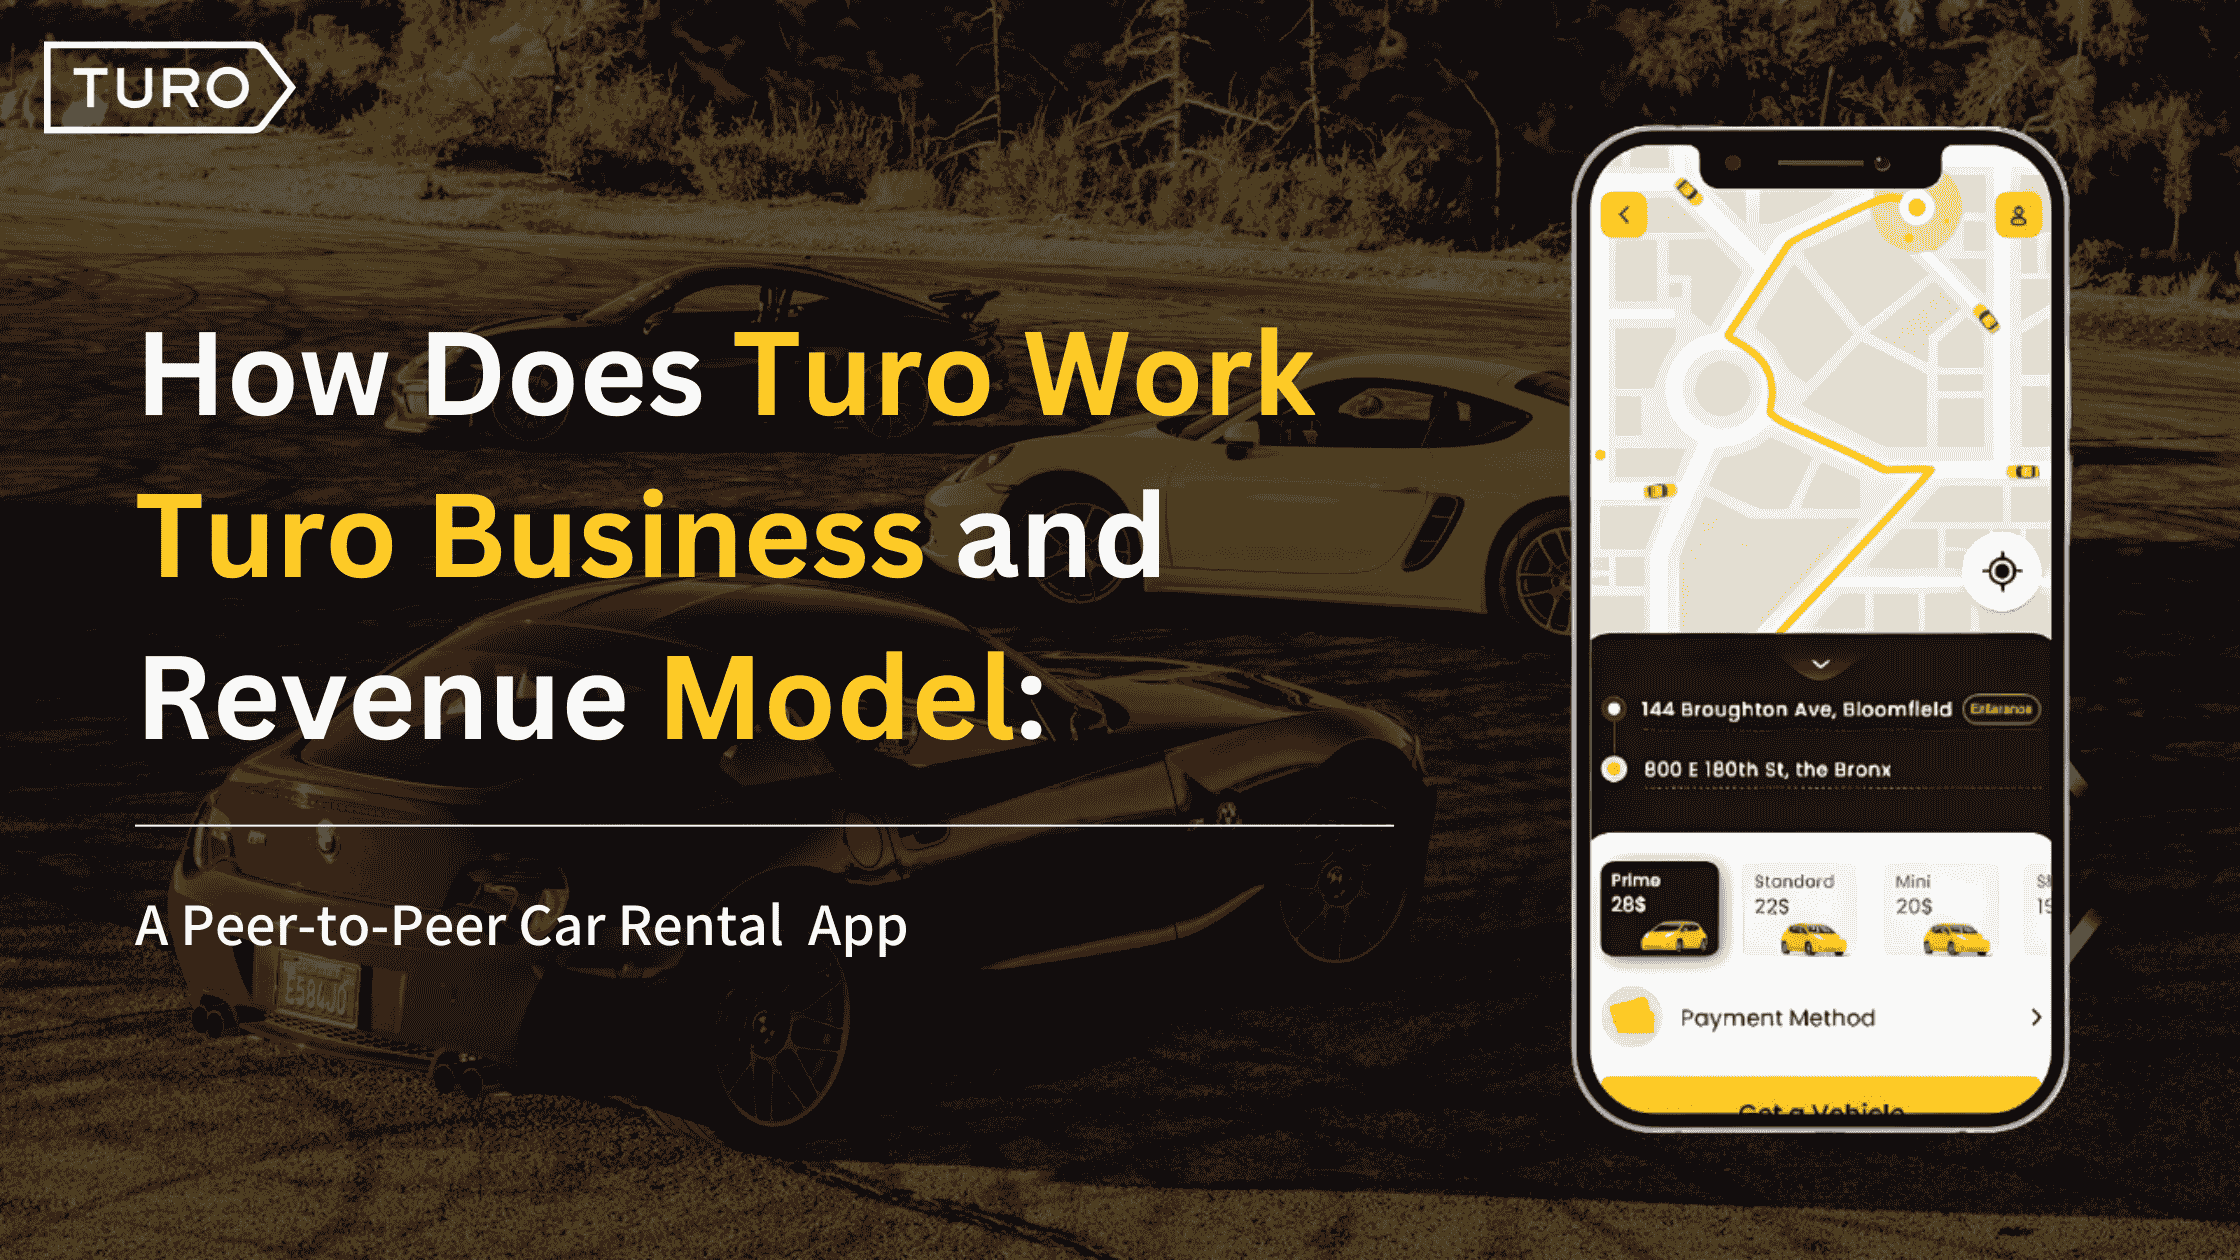 Turo Business Model